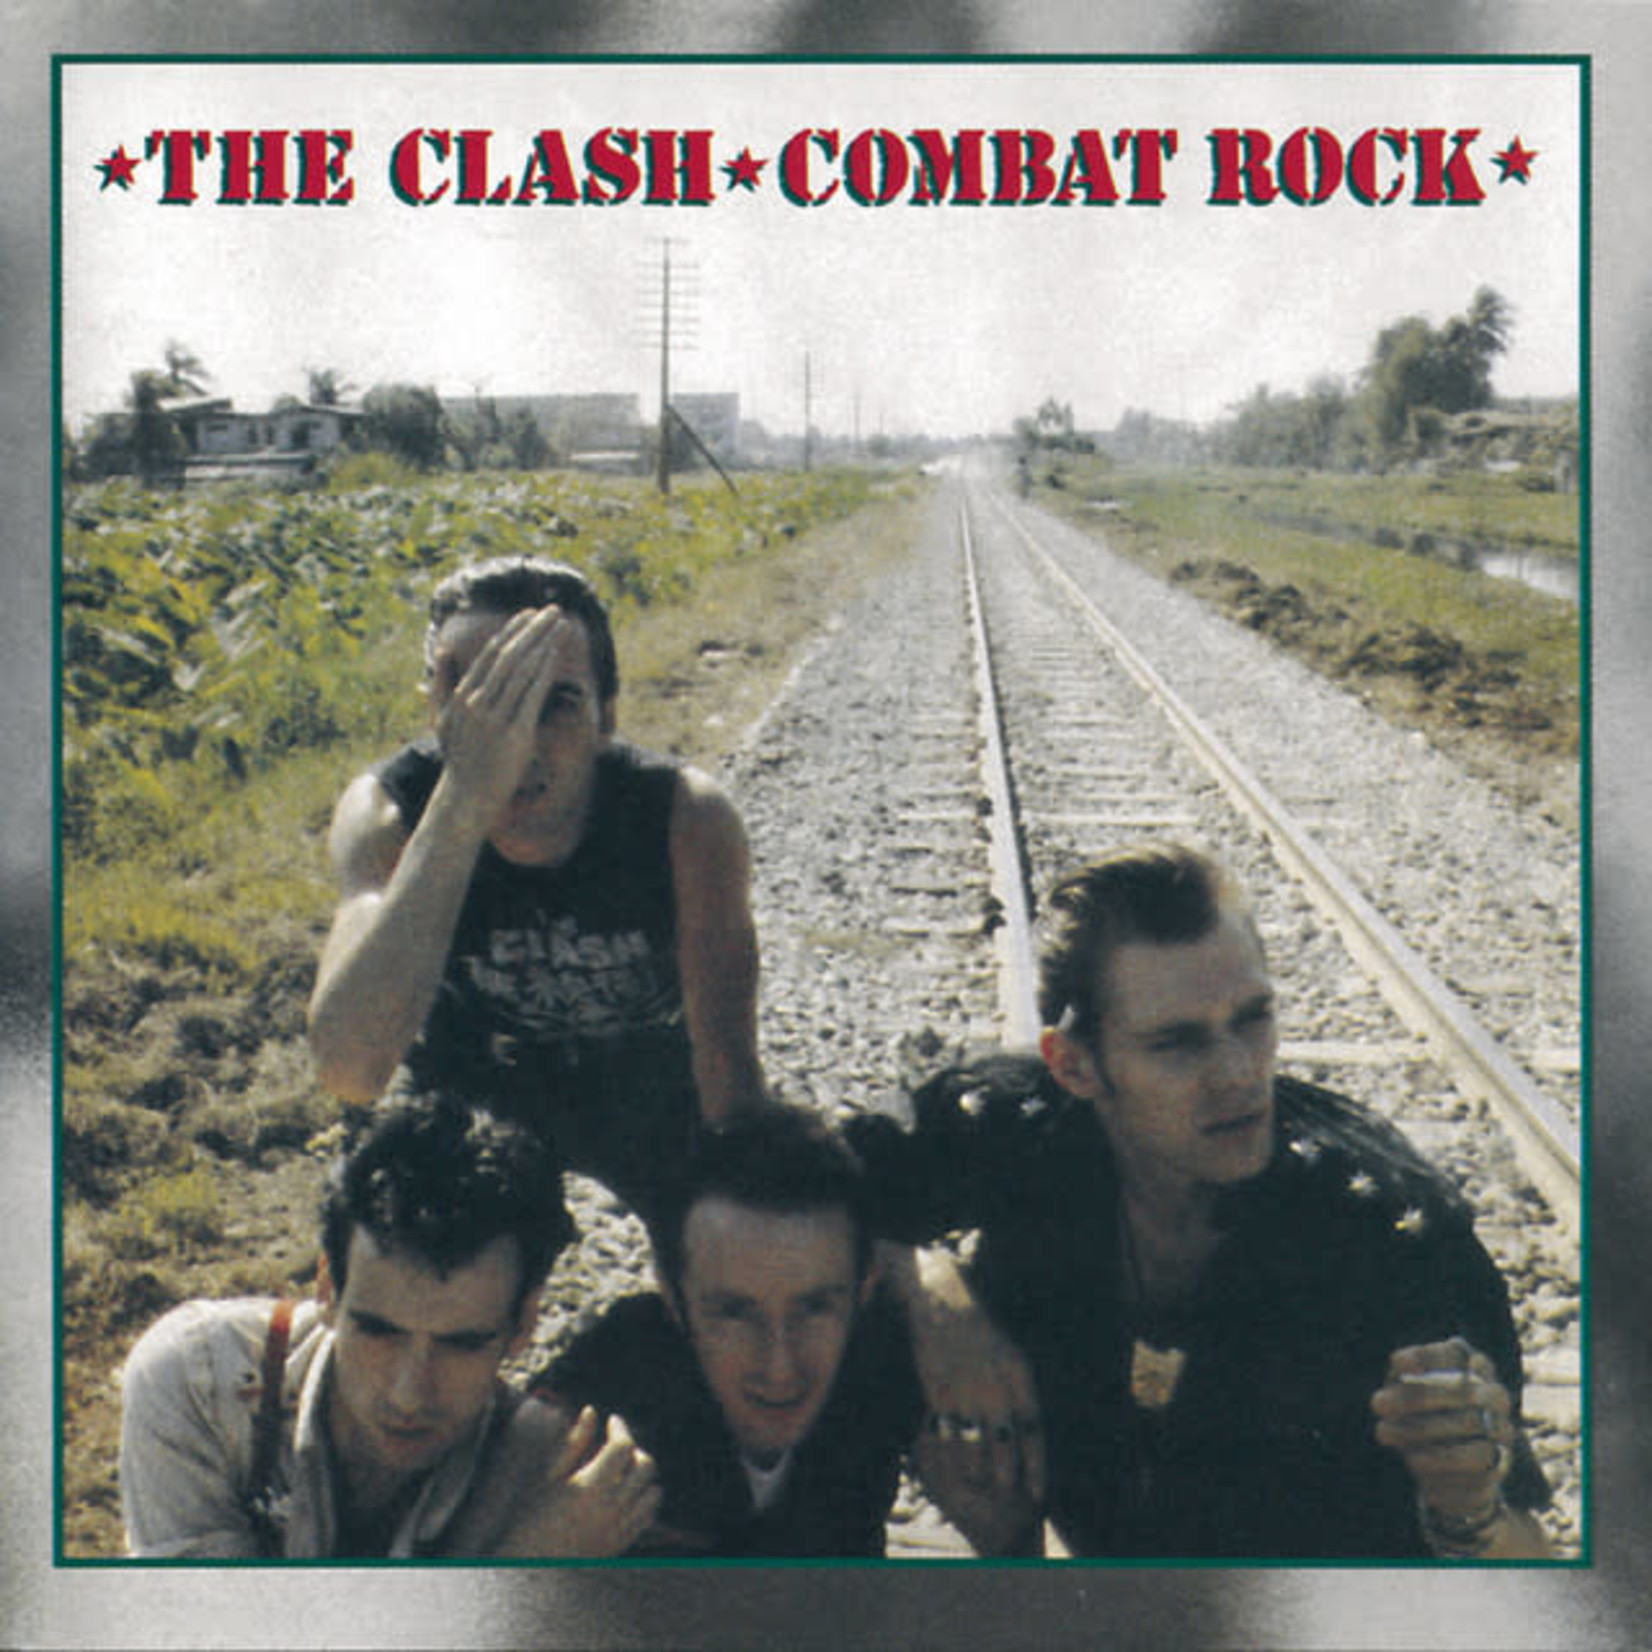 Vinyl The Clash - Combat Rock - Remastered 180g